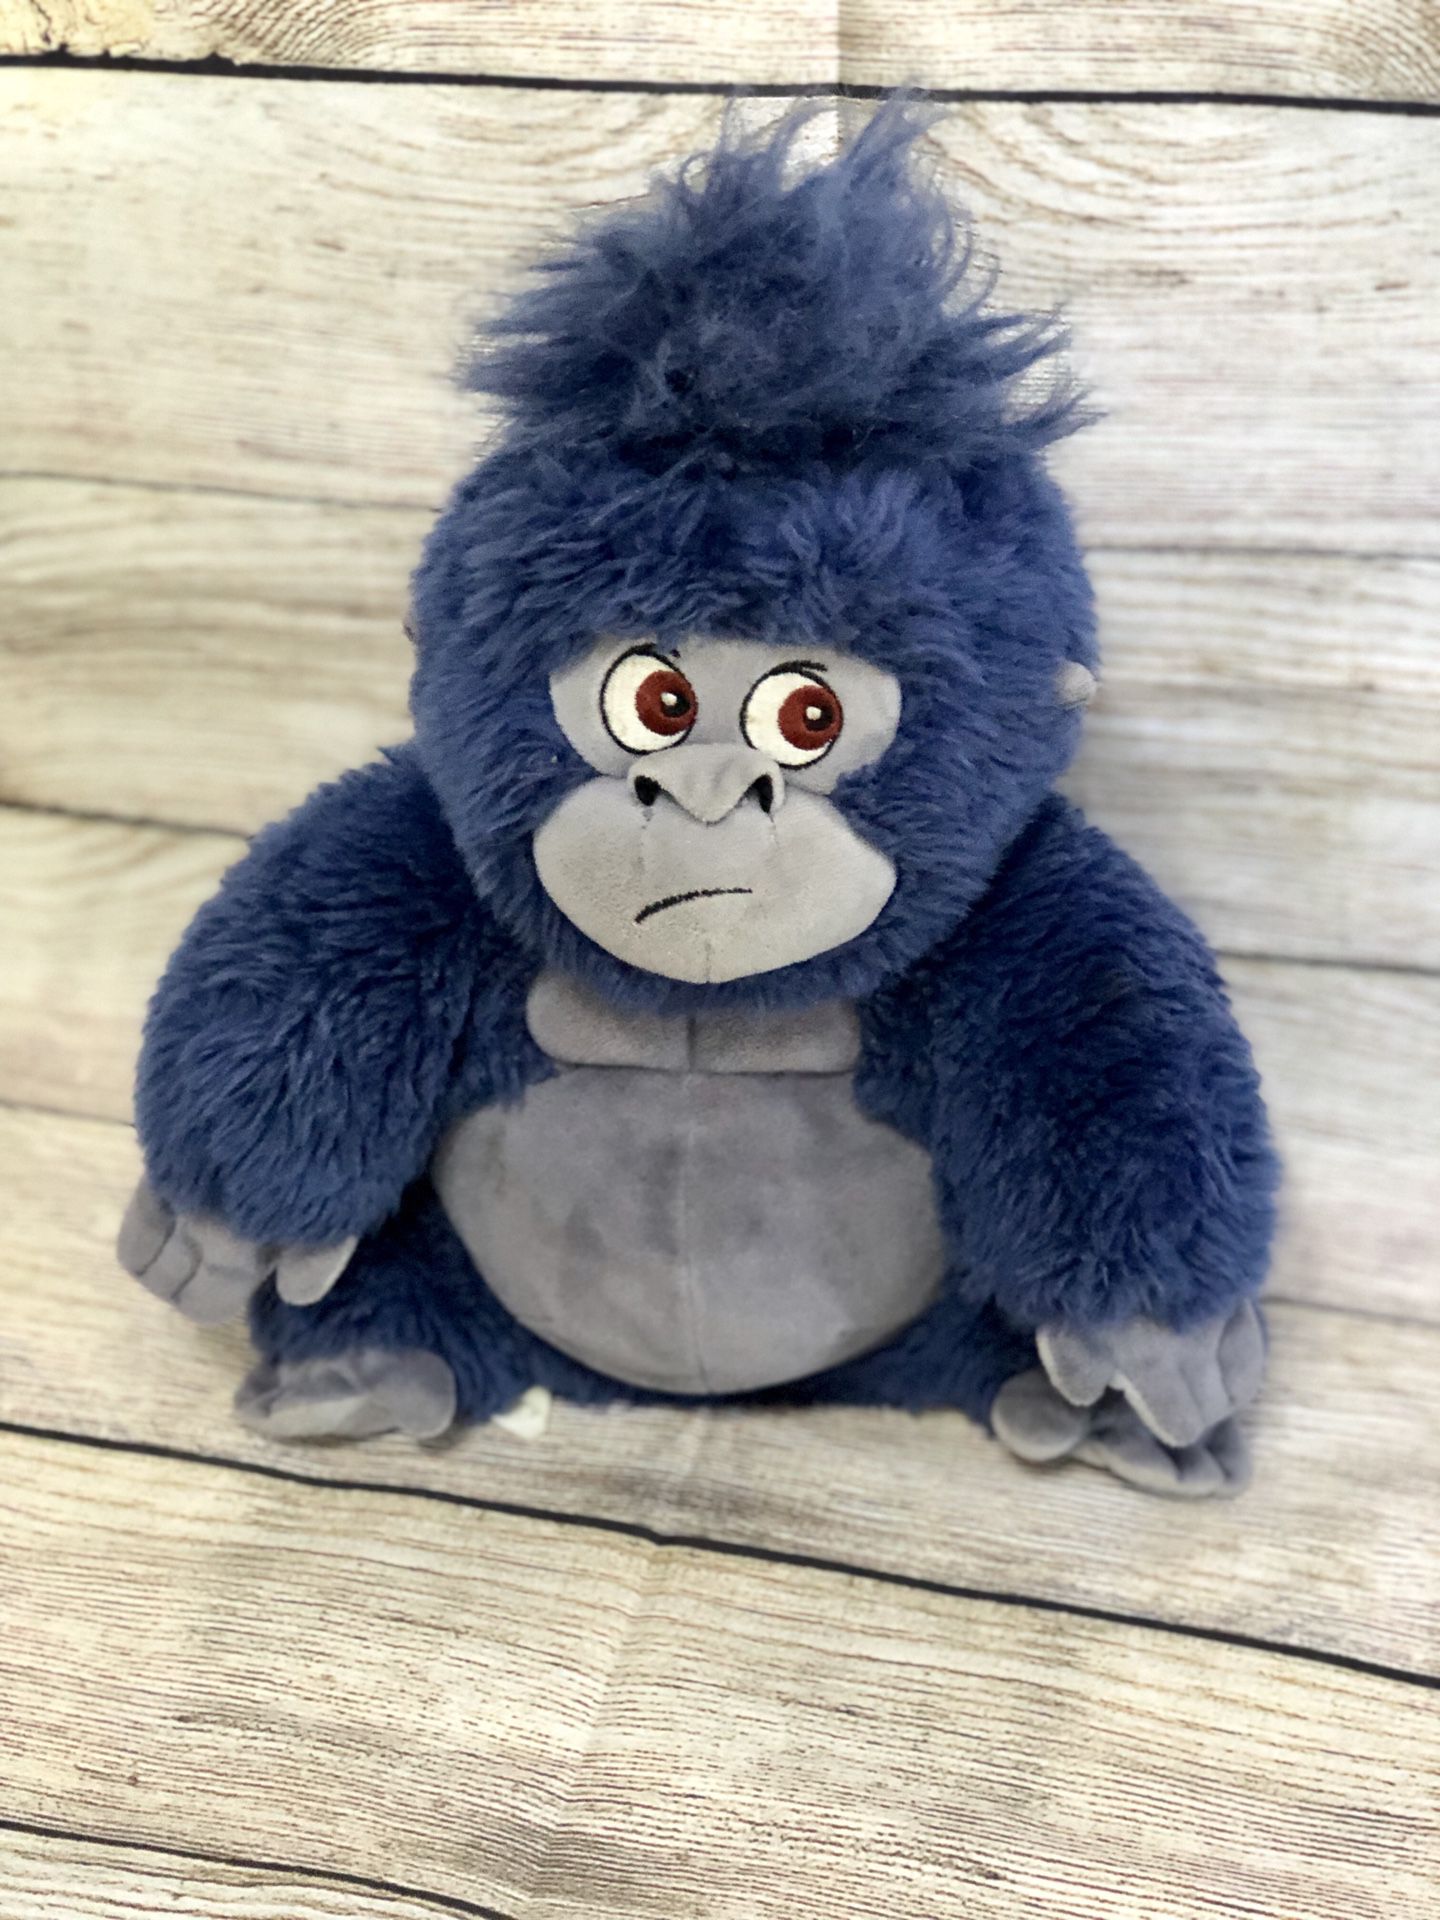 Disney Tarzan Monkey stuffed animal